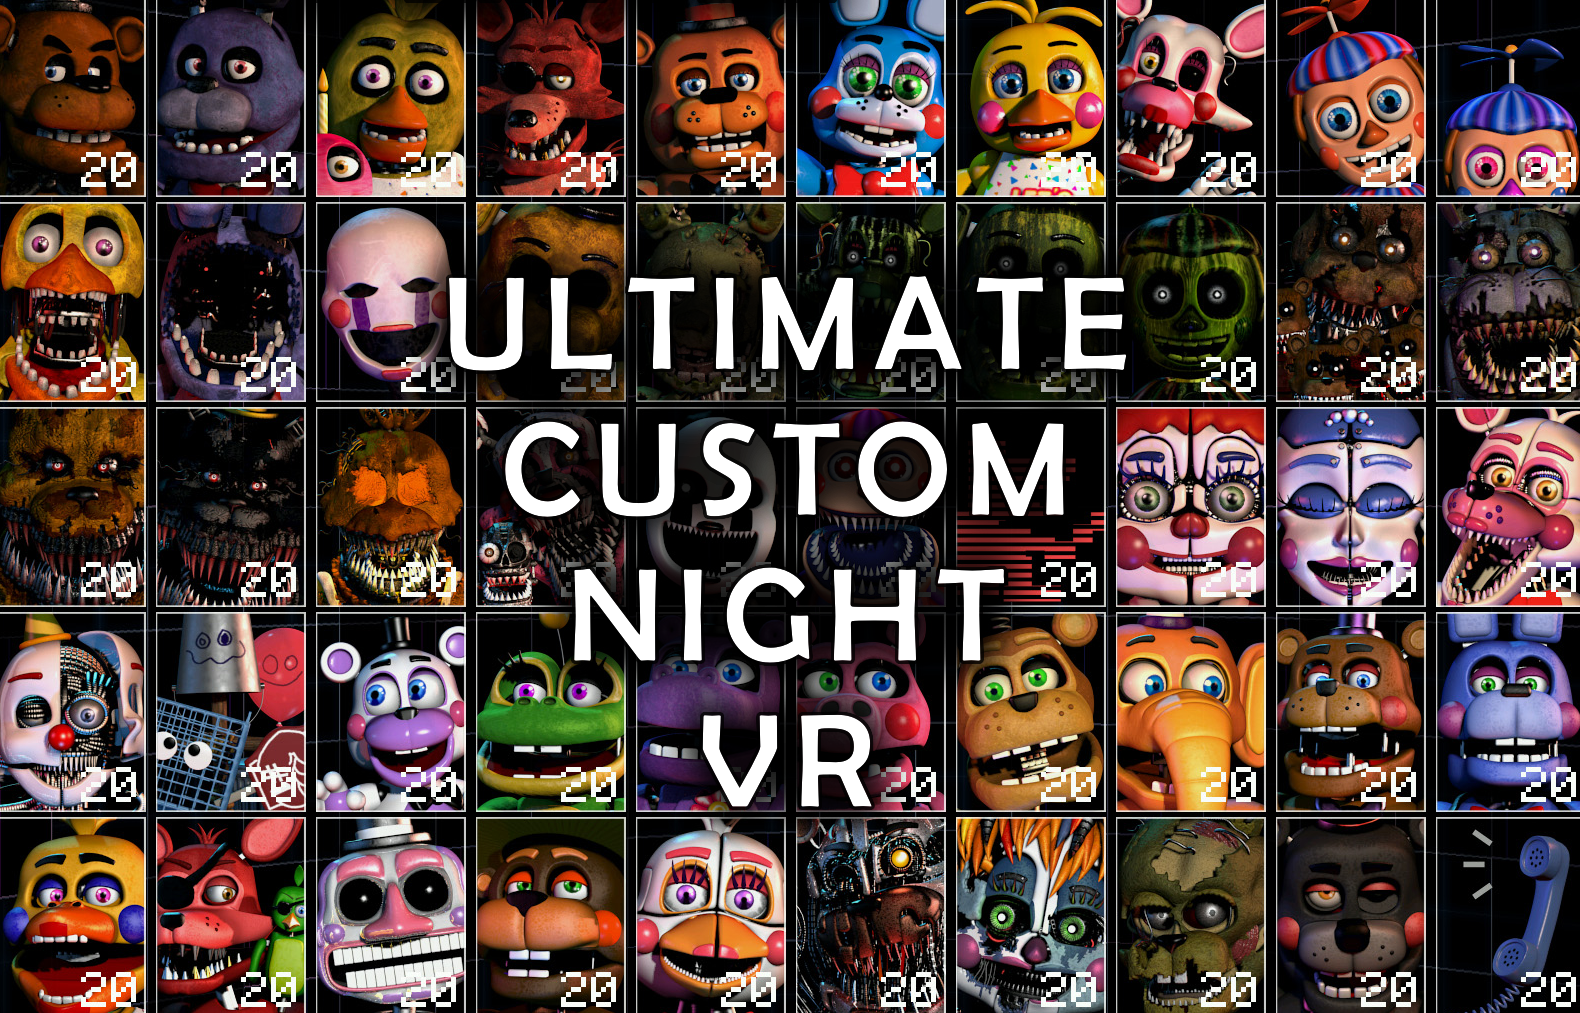 FNAF Ultimate Custom Night - Play FNAF Ultimate Custom Night On FNAF,  Granny, Backrooms - Play Online Horror Games For Free!